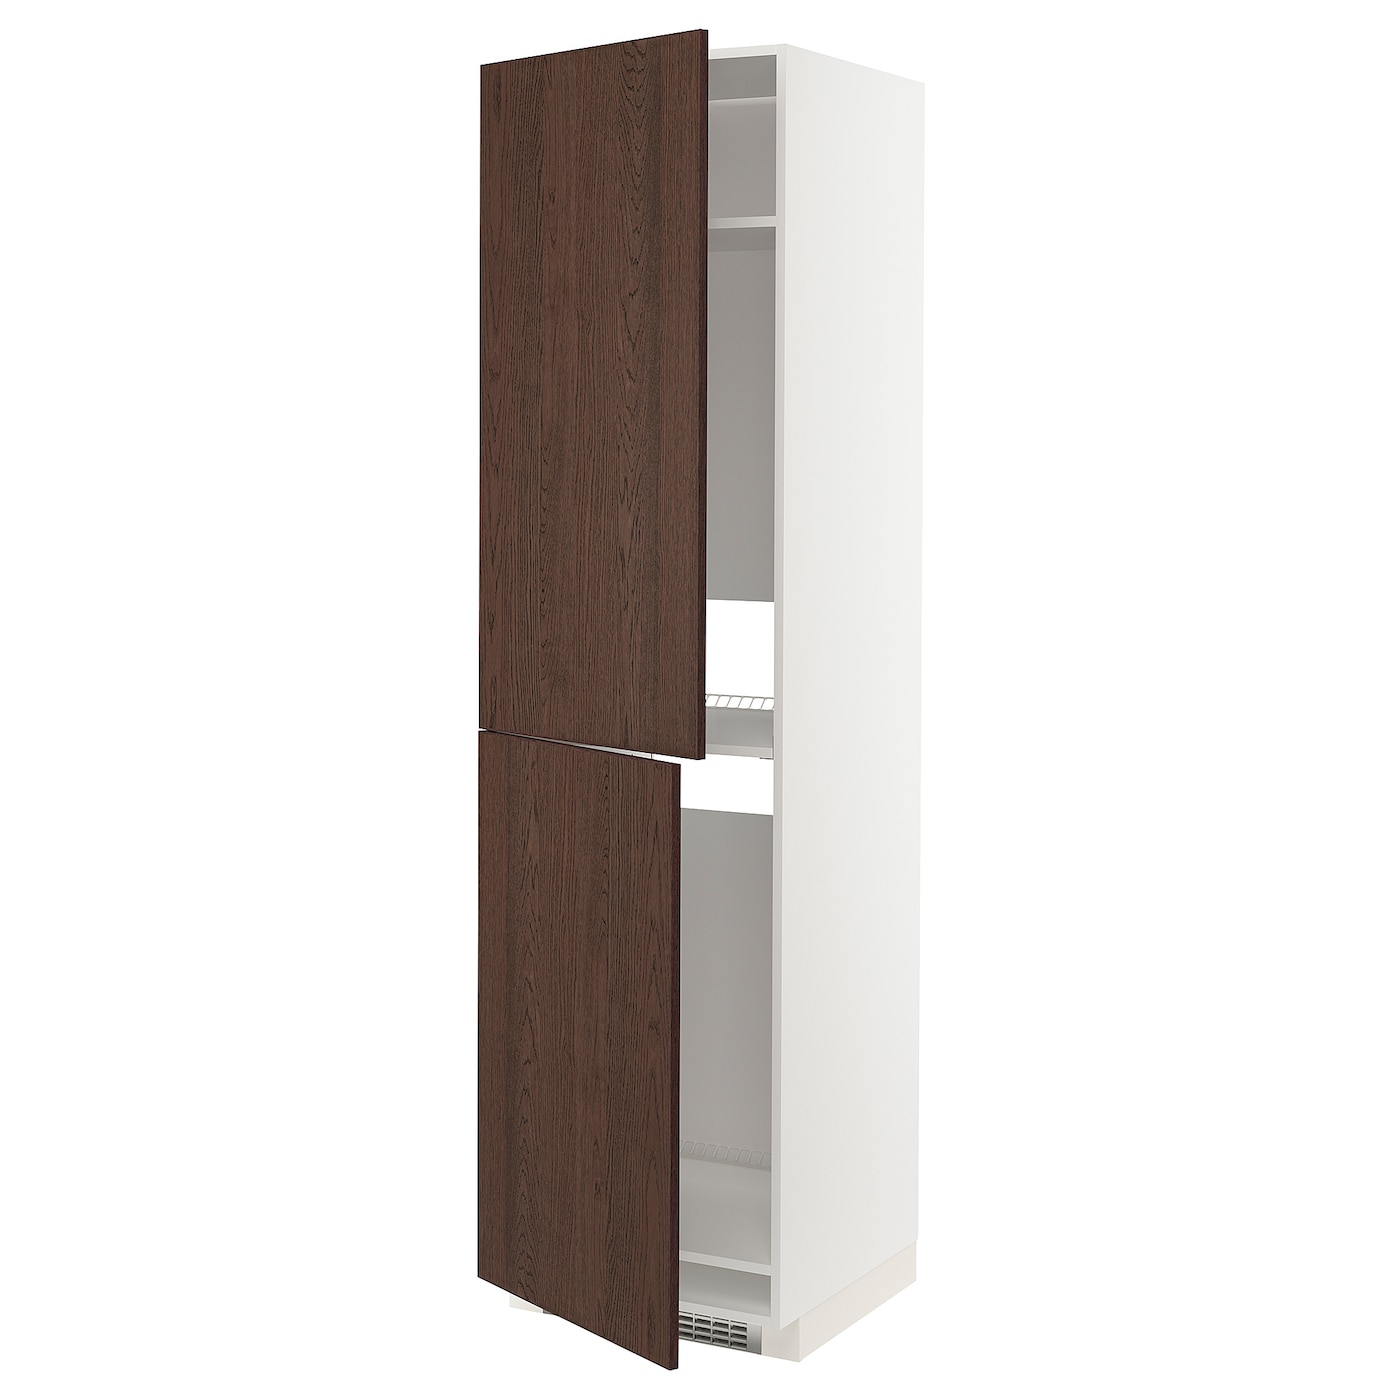 Высокий кухонный шкаф - IKEA METOD/МЕТОД ИКЕА, 220х60х60 см, белый/коричневый